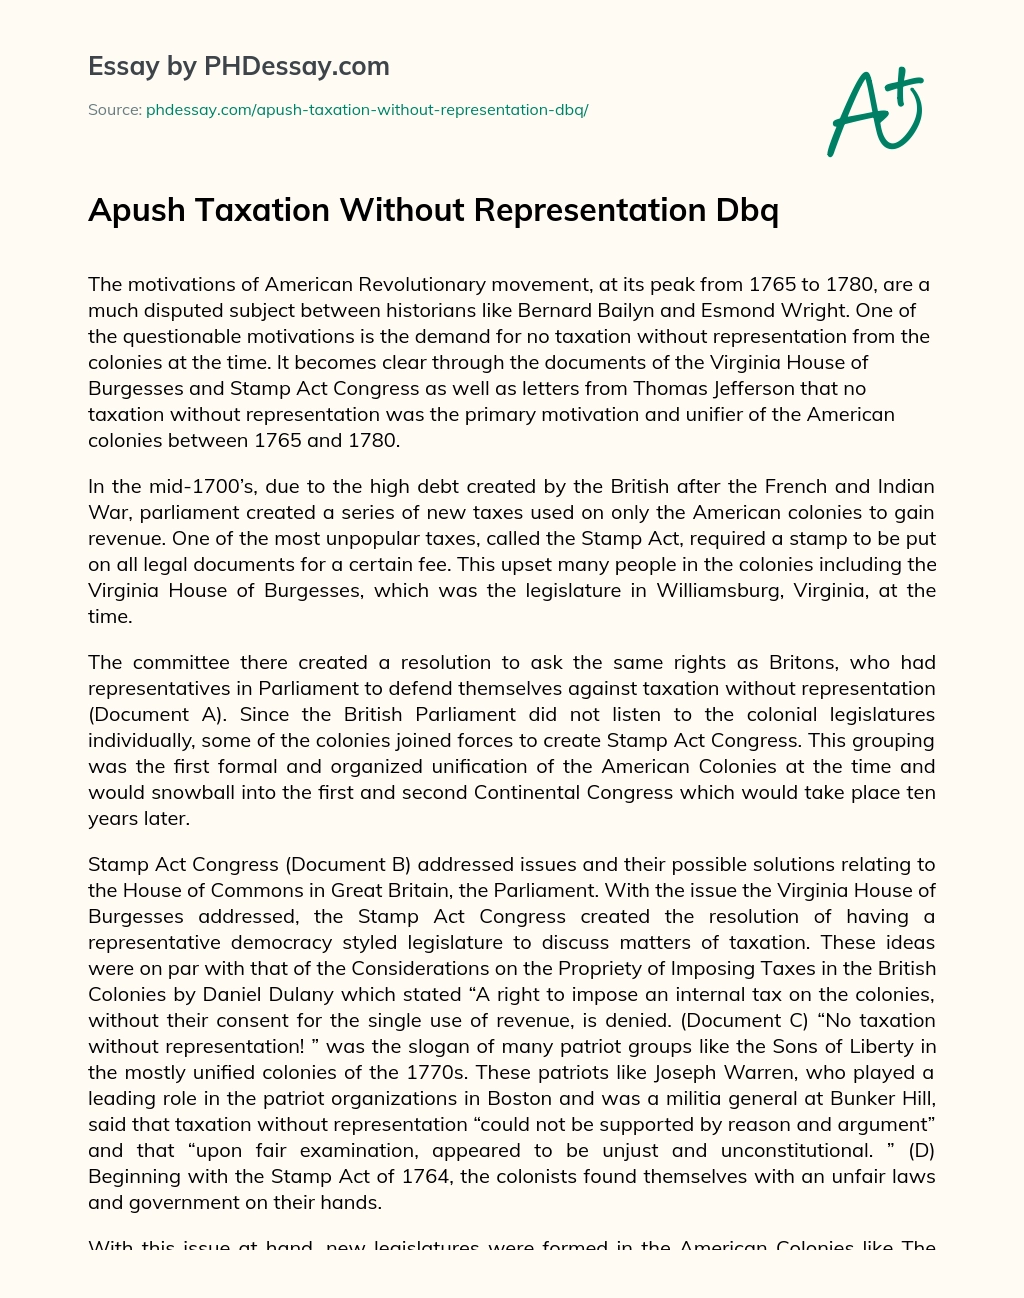 Apush Taxation Without Representation Dbq essay